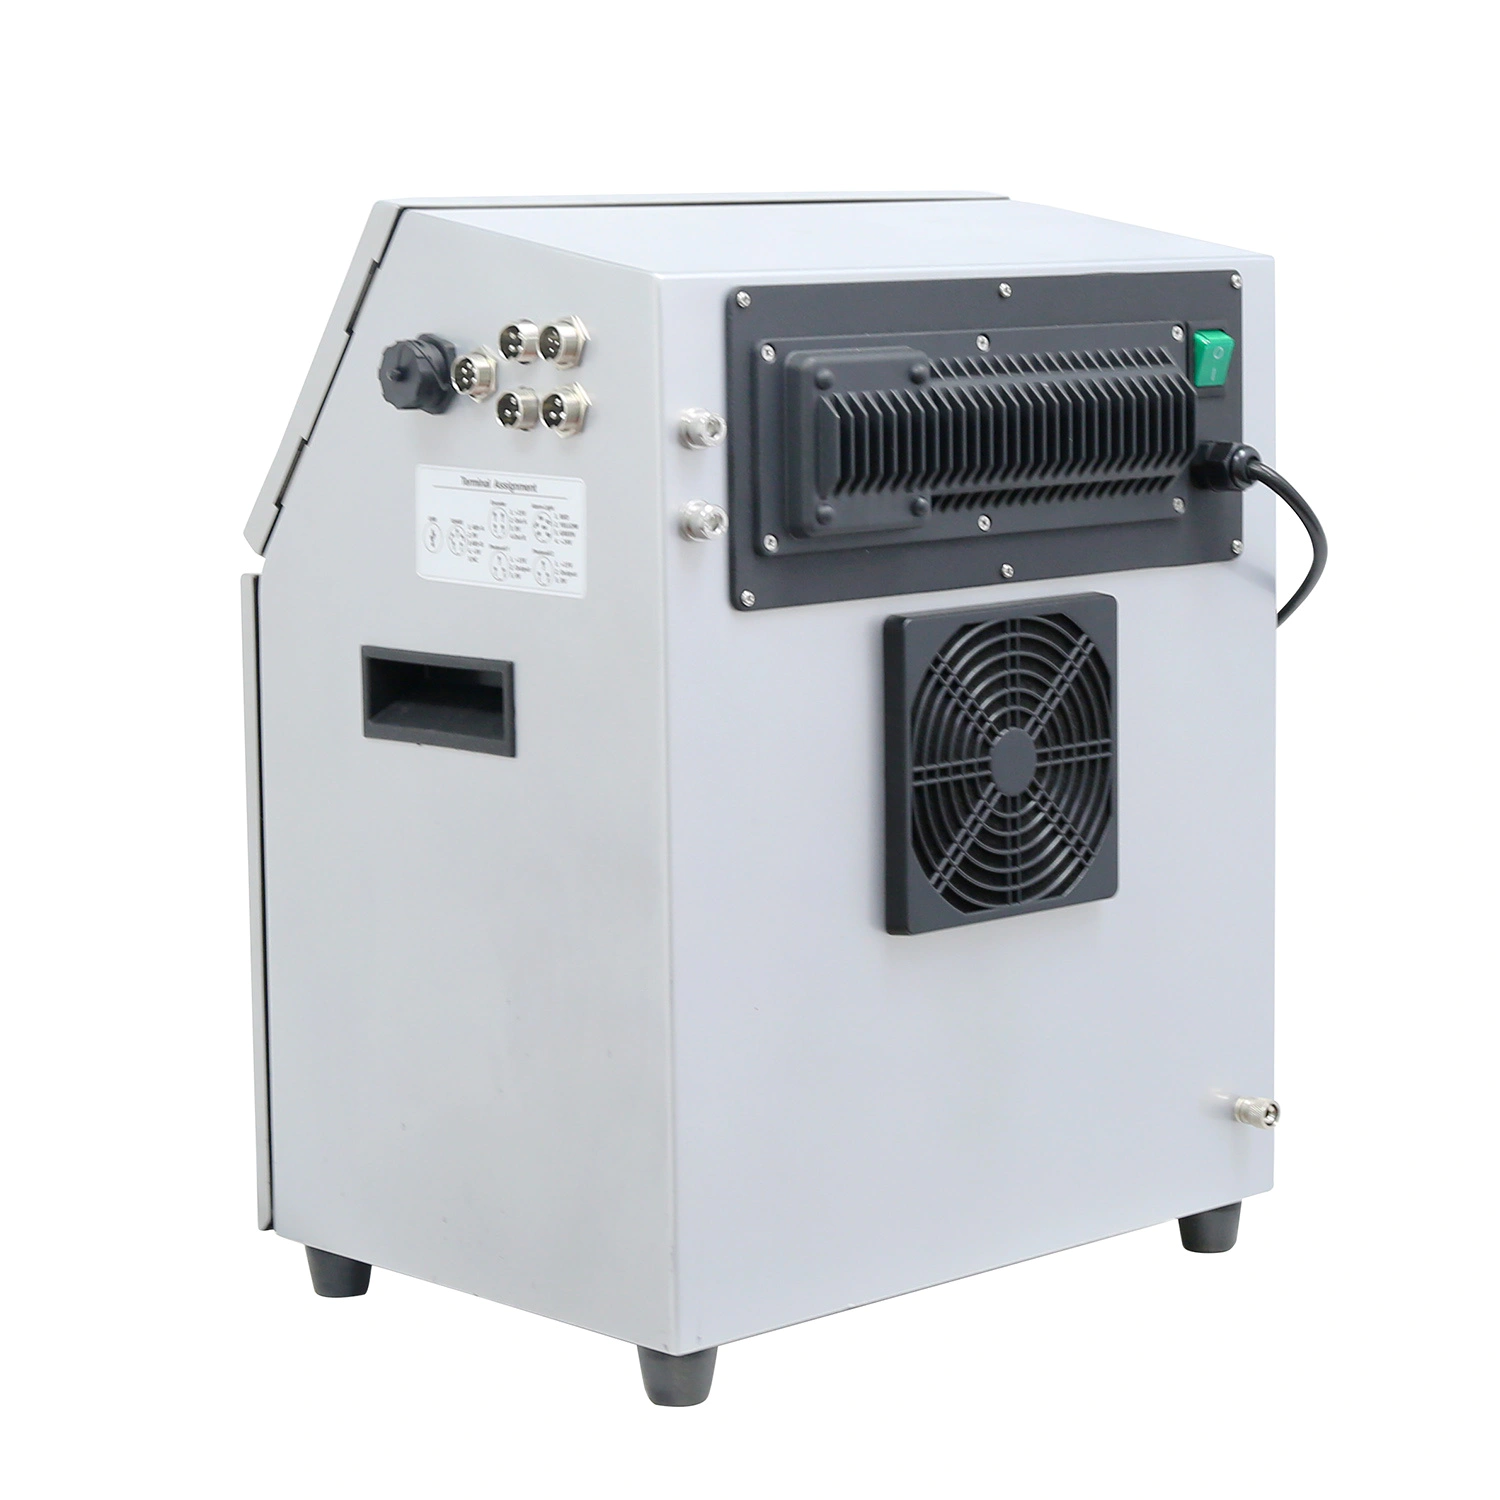 Lead Tech Lt800 Laser Engraving Printer